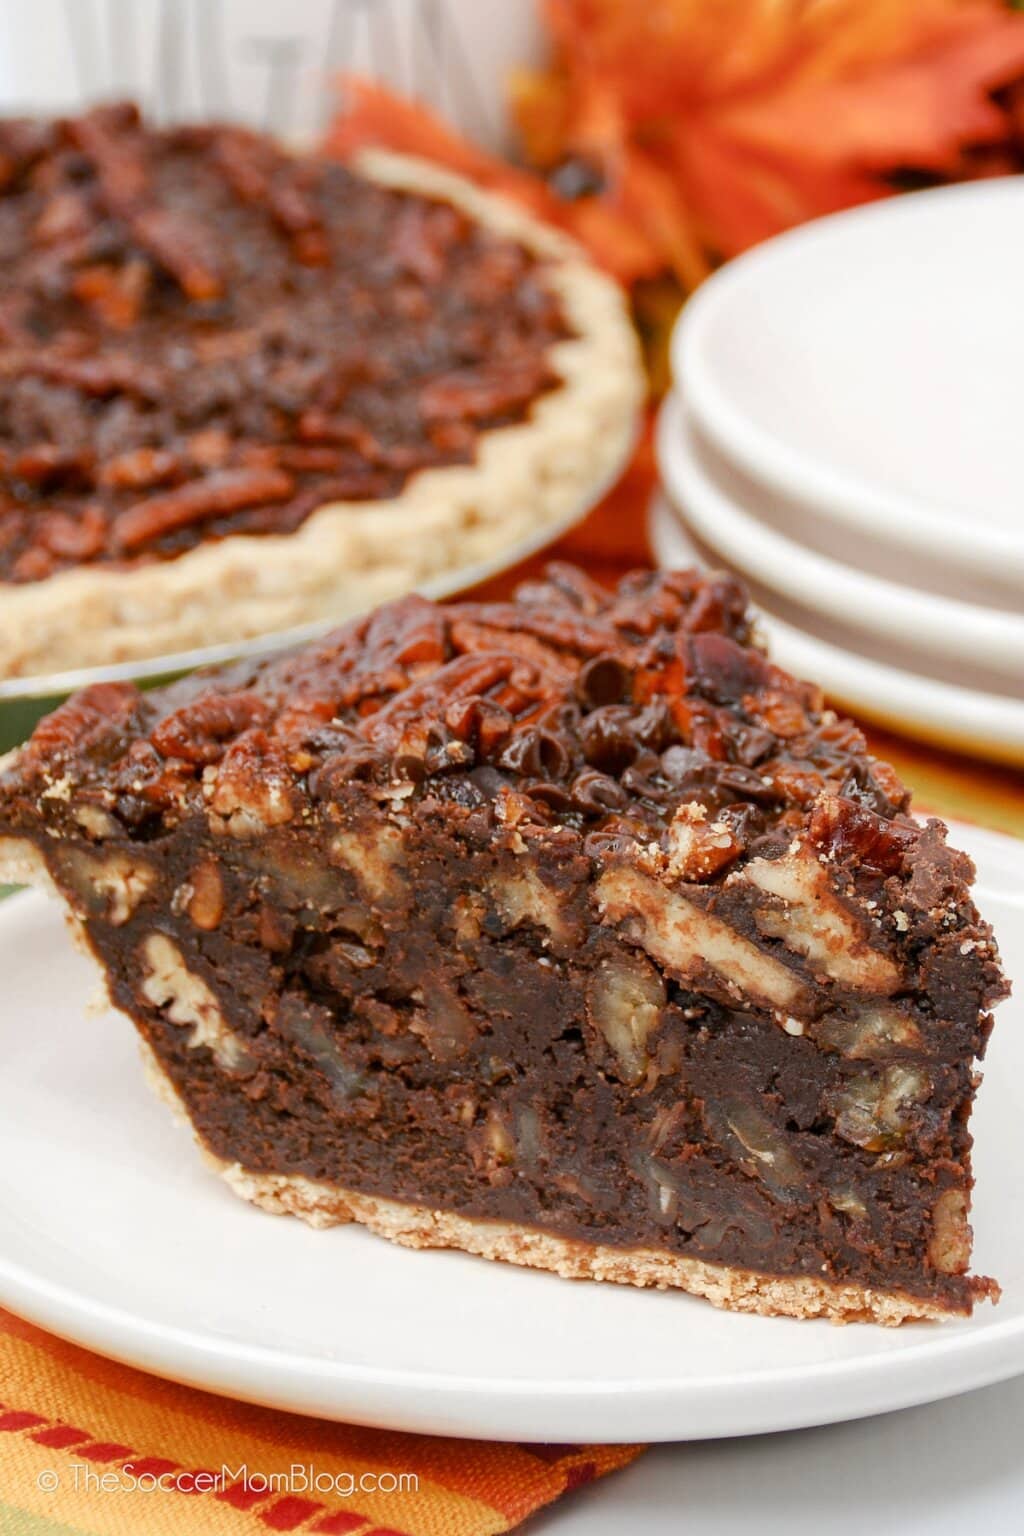 Slice of Texas chocolate pecan pie.